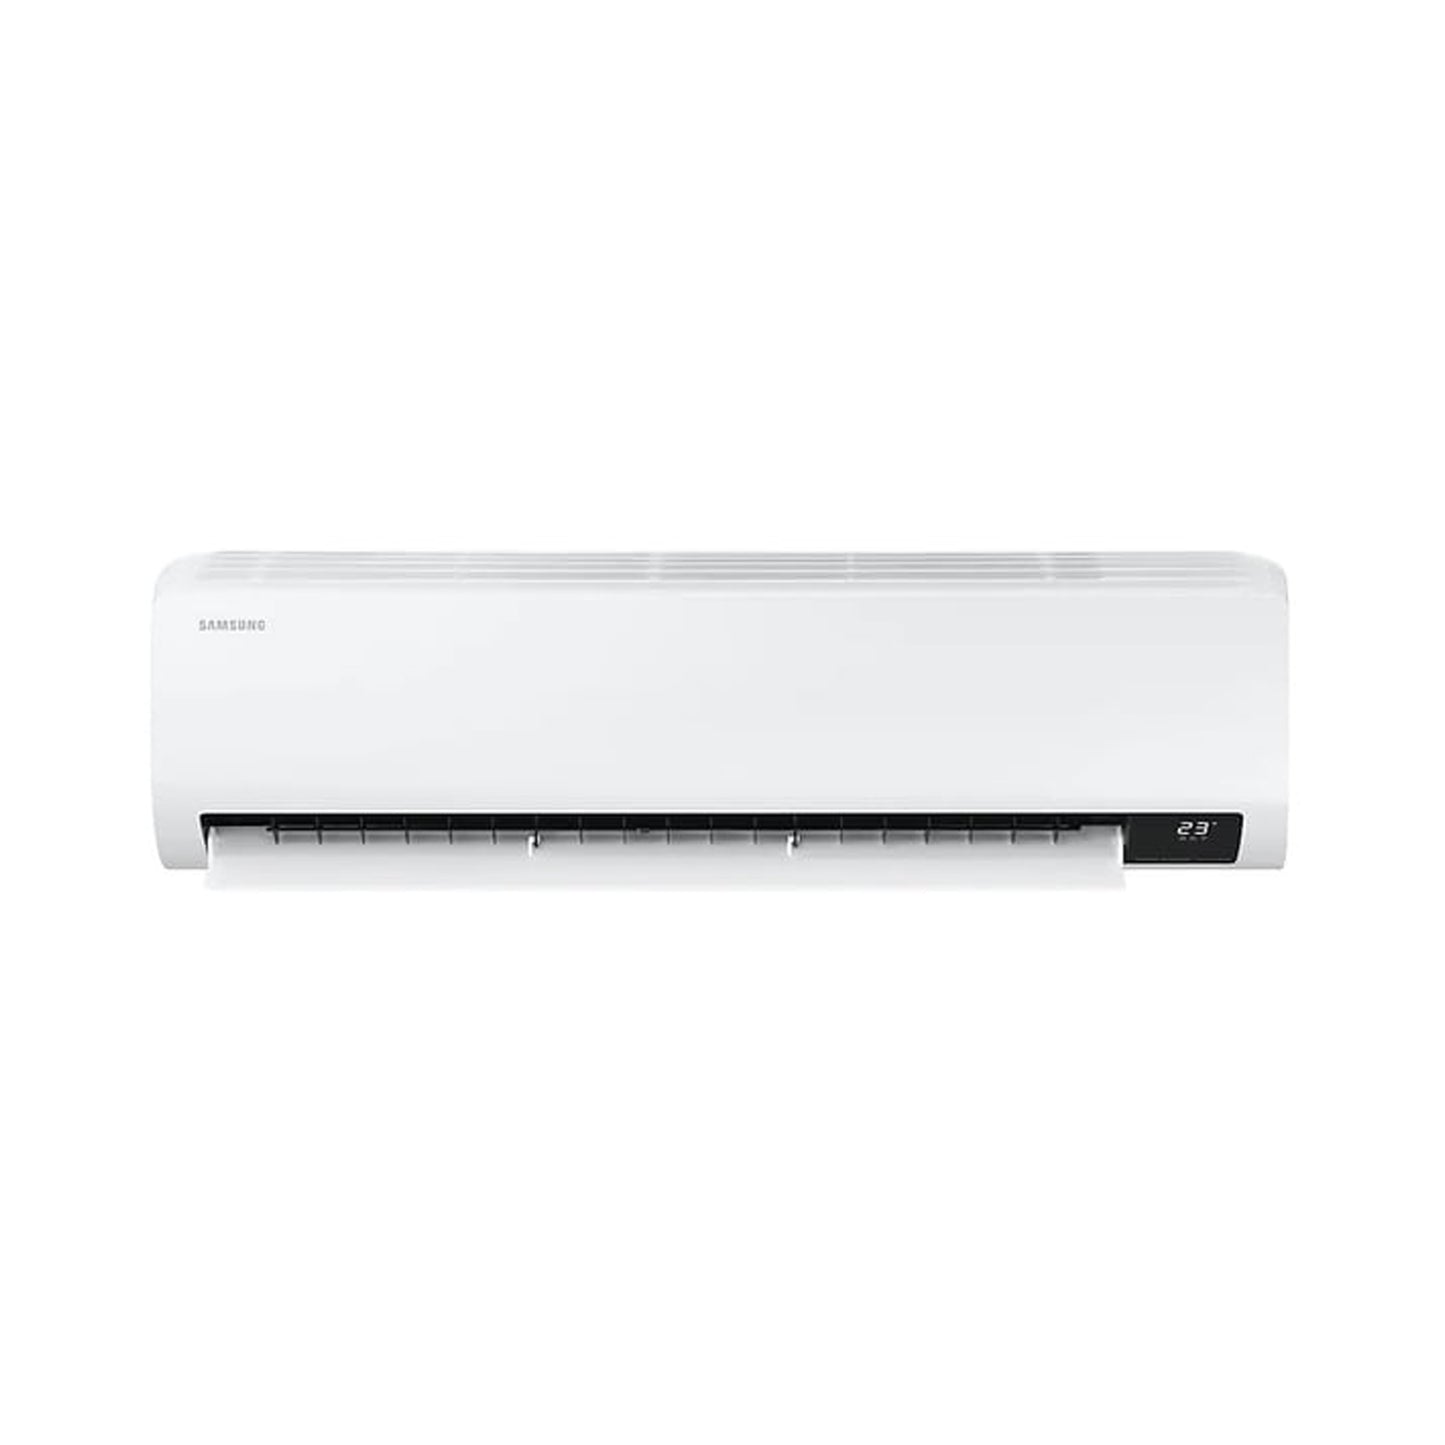 Samsung 1.5 Ton Digital Inverter Split Air Conditioner, AR18TVFZEWK